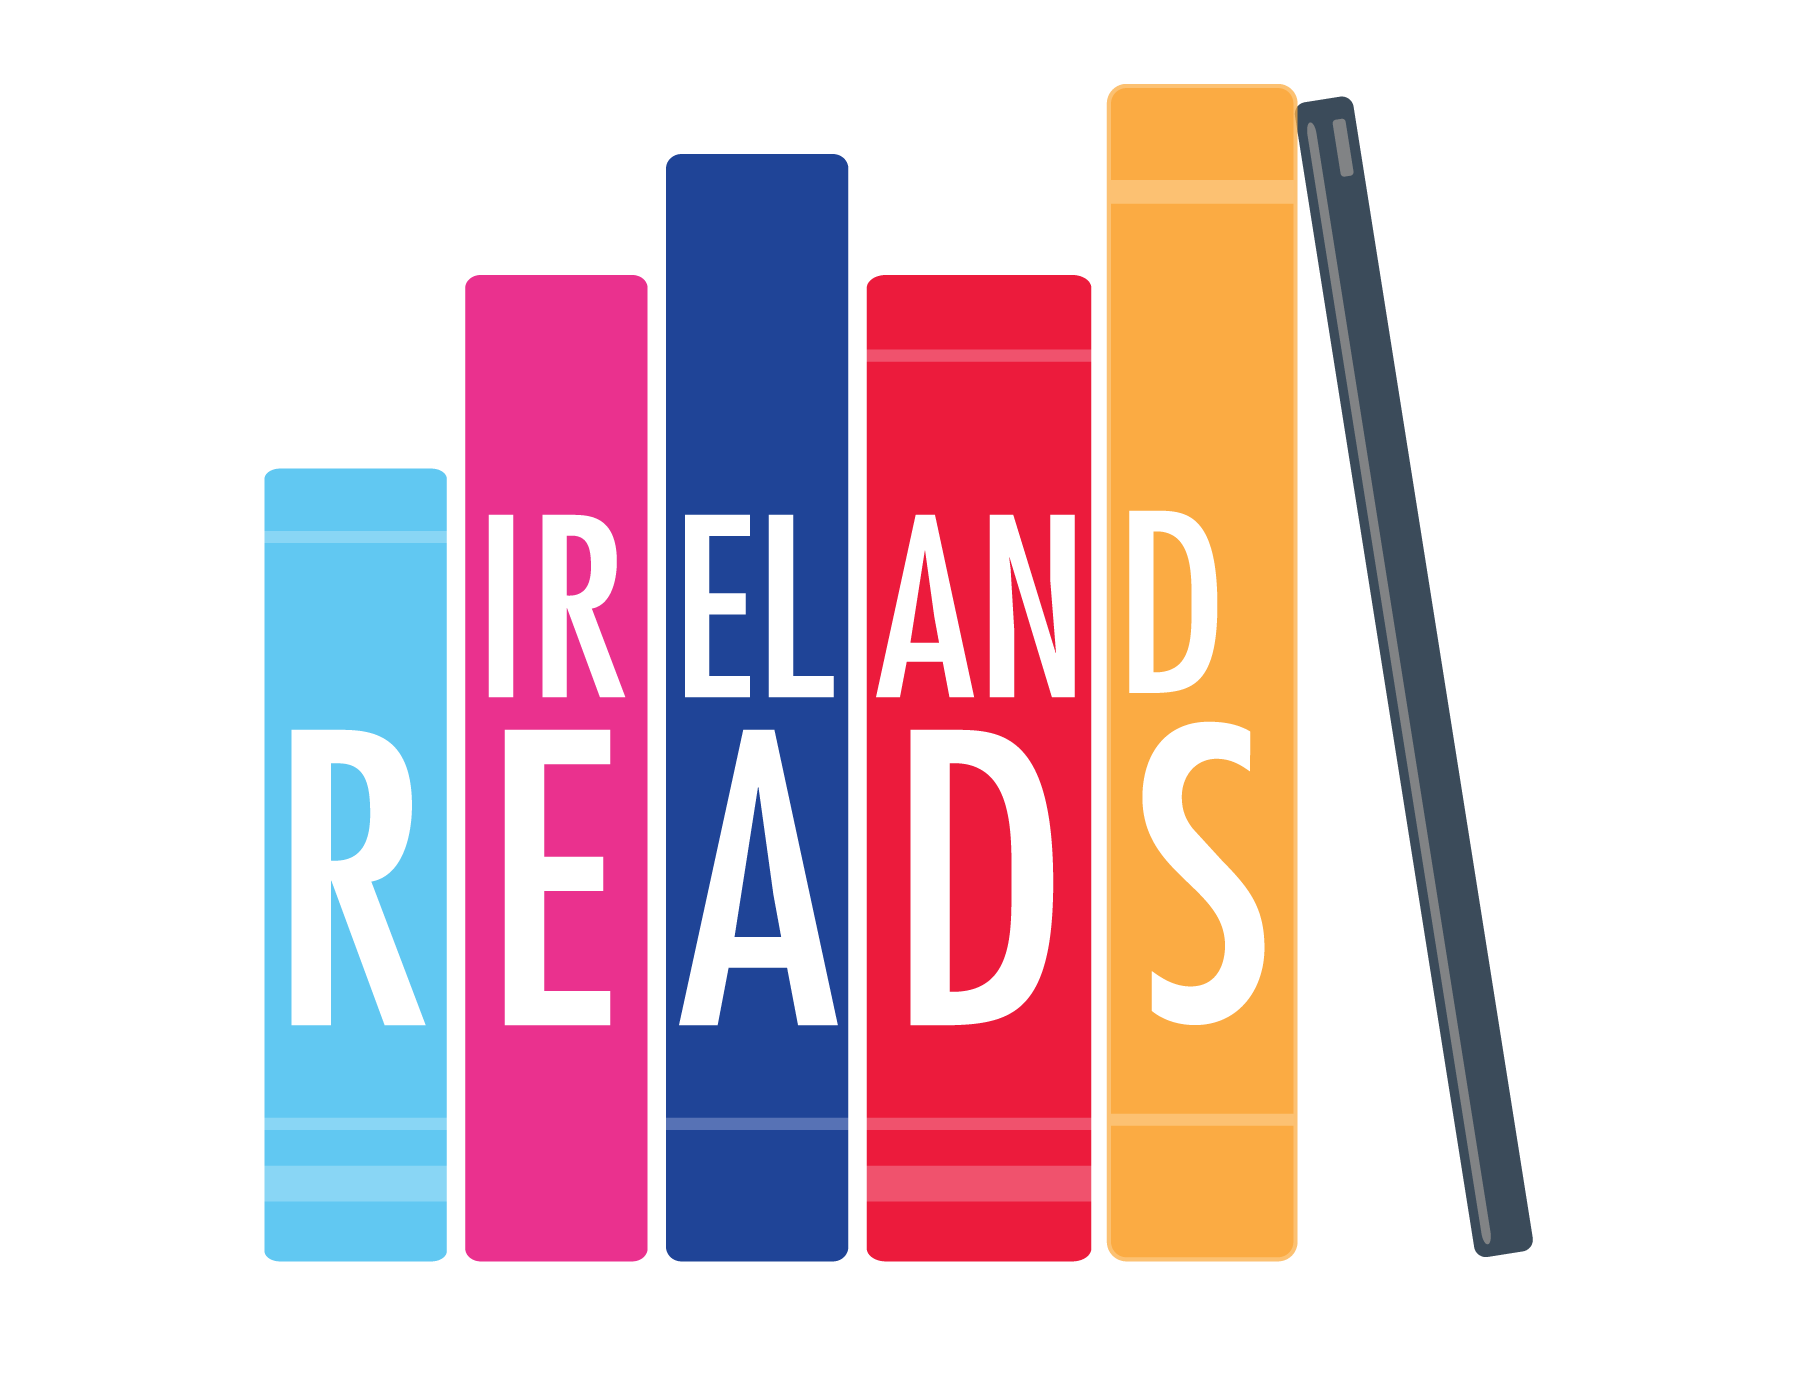 LGMA Ireland Reads